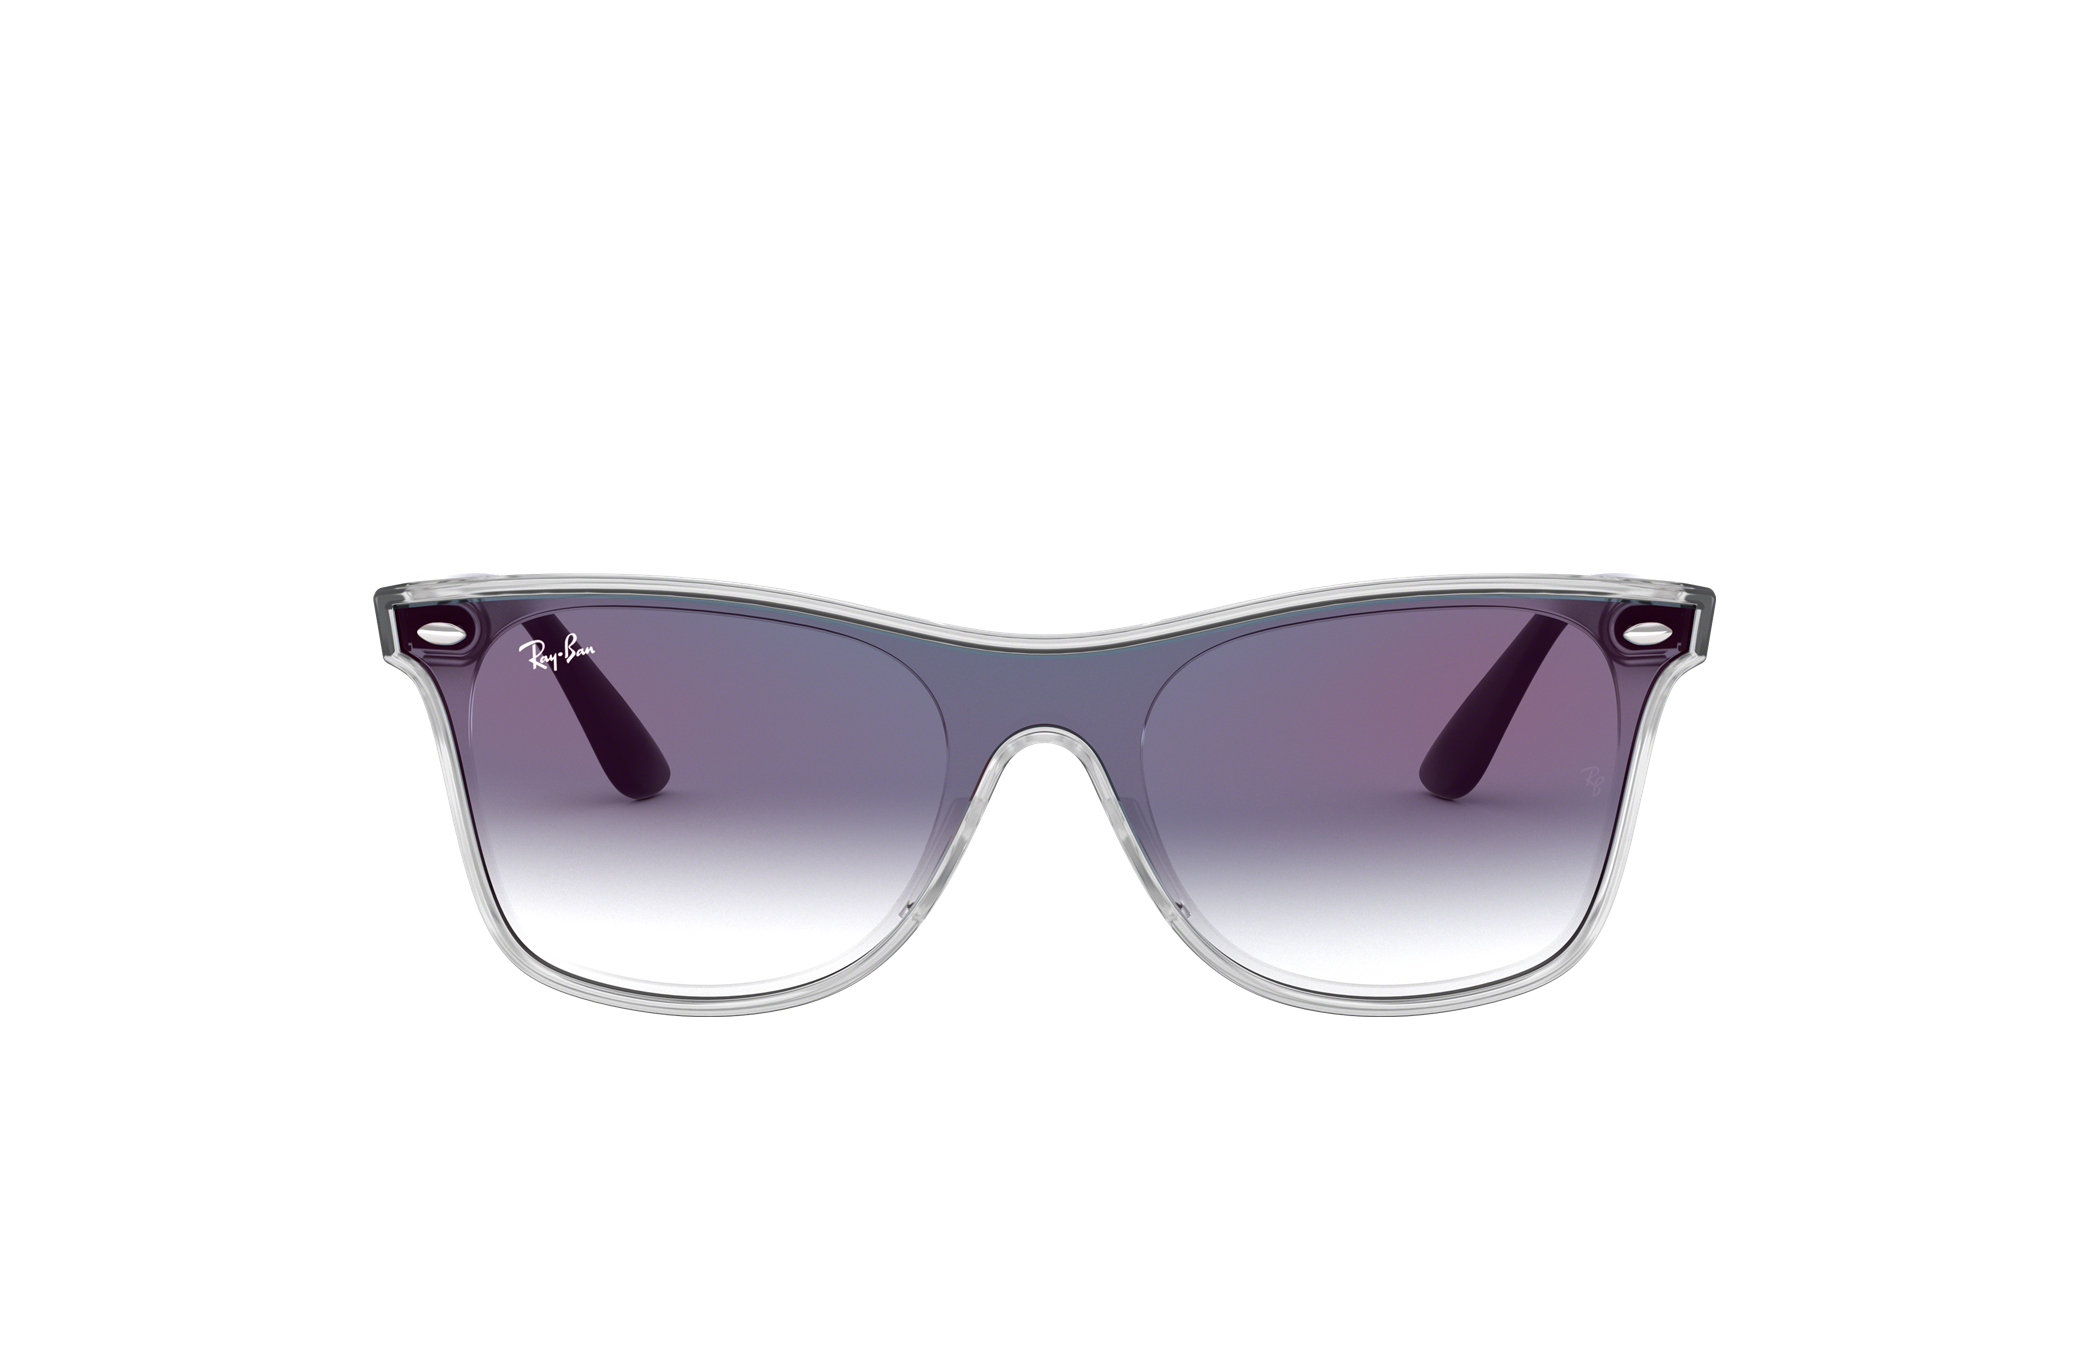 Blaze Wayfarer Sunglasses in Transparent and Blue | Ray-Ban®